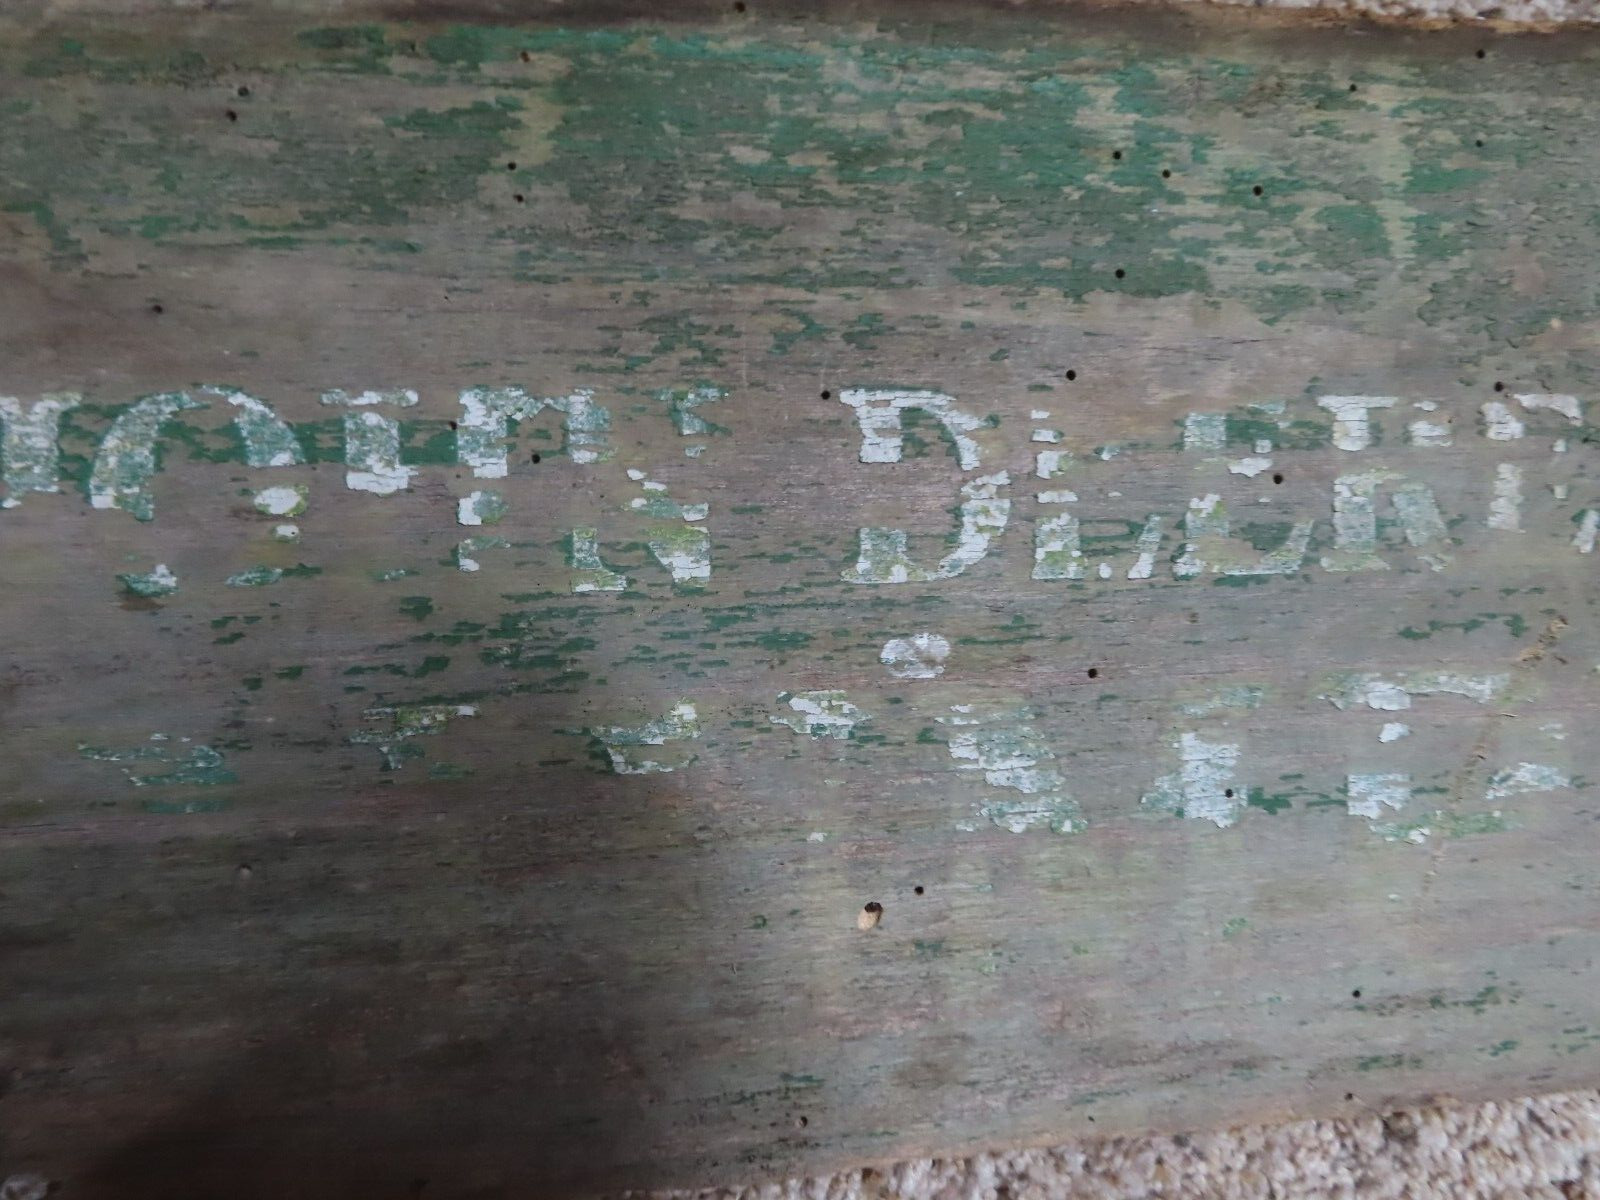 Antique John Deere Name Old Green Board 8